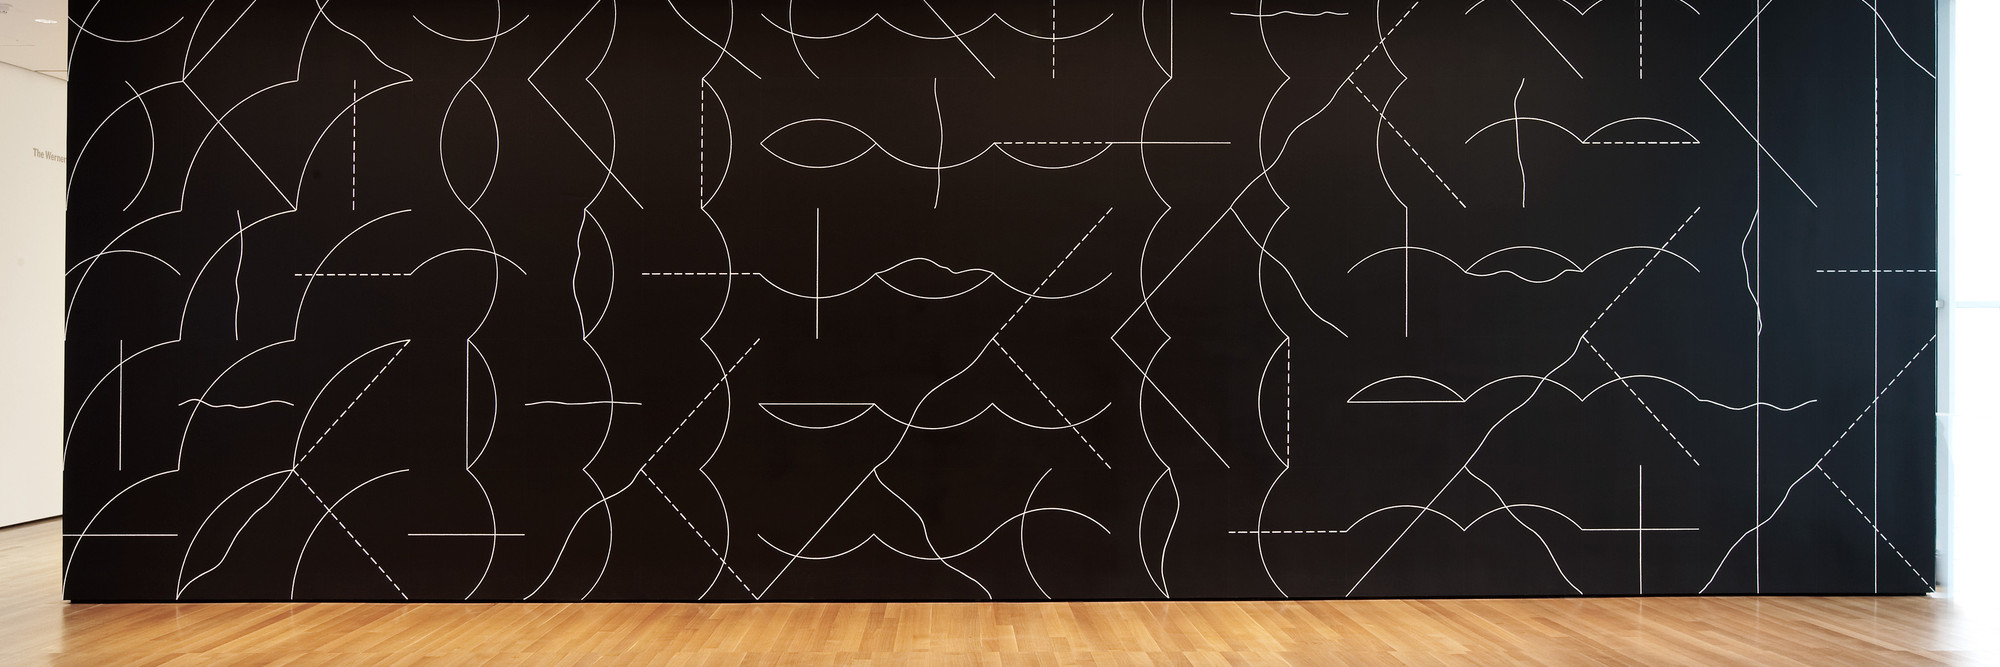 Solar System Drawing Wall Mural – Wallmonkeys